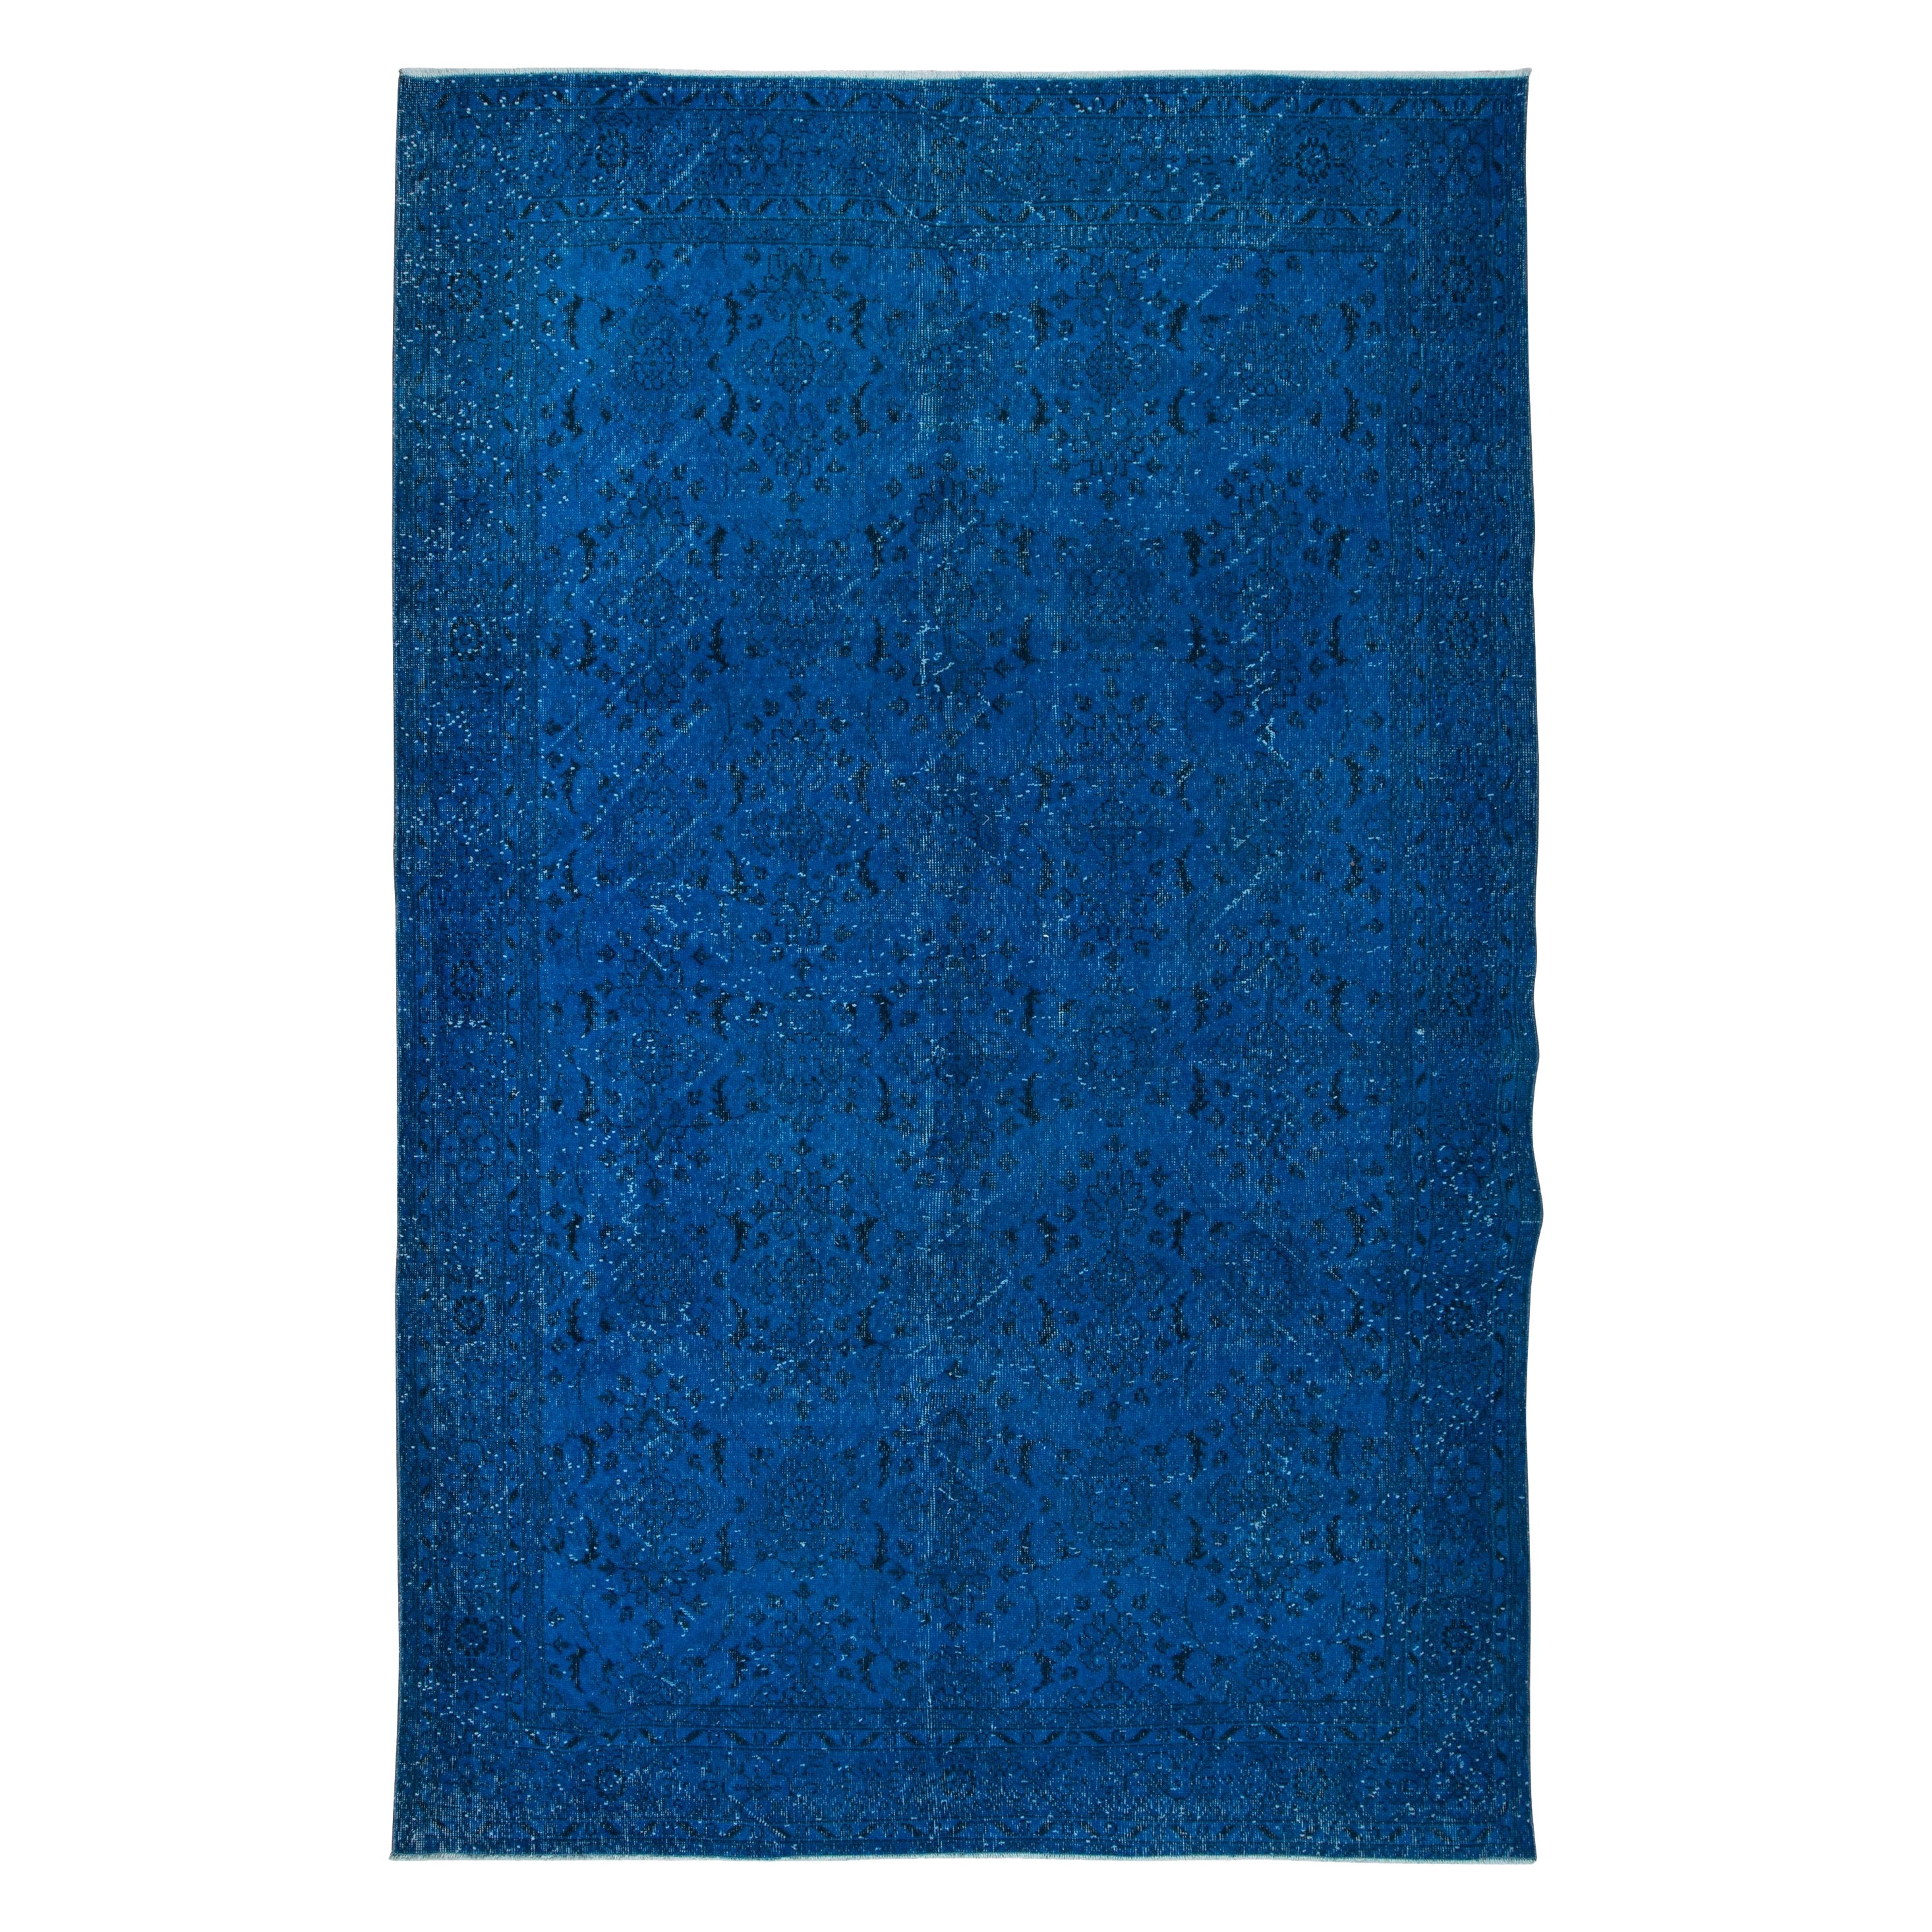 6.6x10.2 Ft Modern Blue Handmade Area Rug, Turkish Carpet, Woolen Floor Covering (tapis de sol en laine)